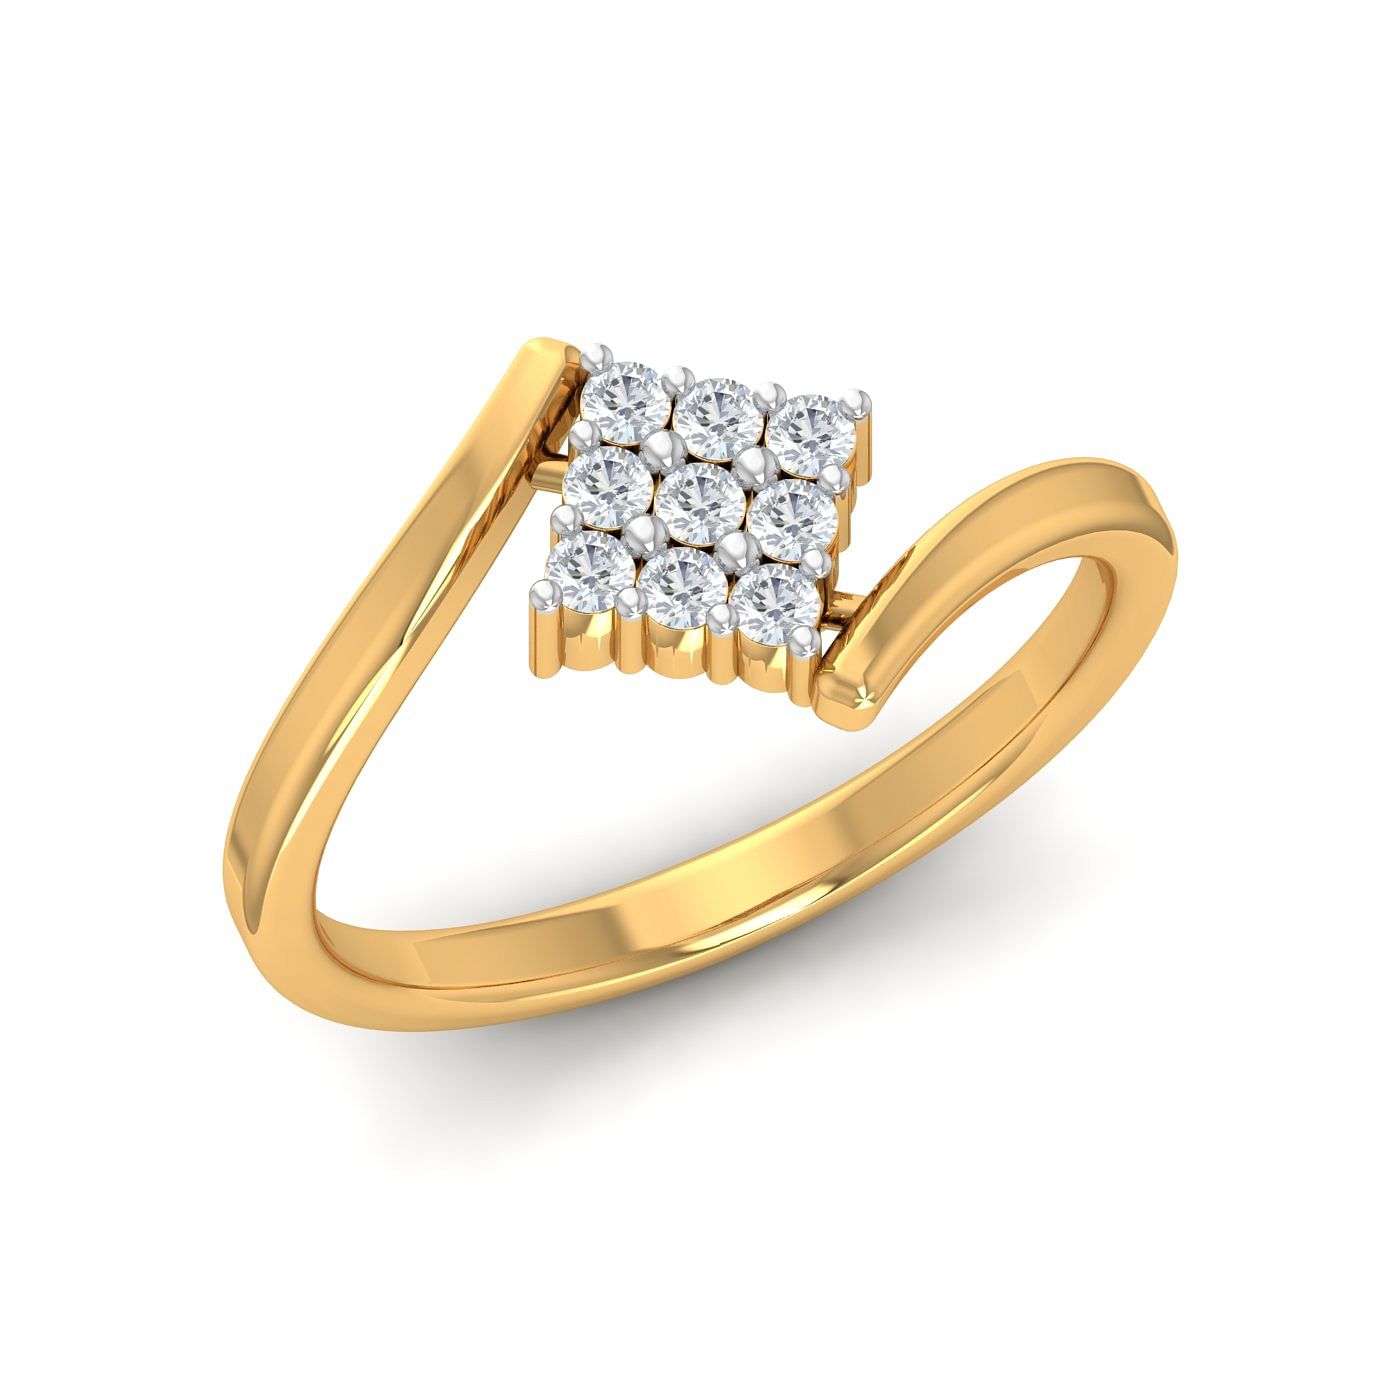 Square Design Cluster Diamond Yellow Ring For Women